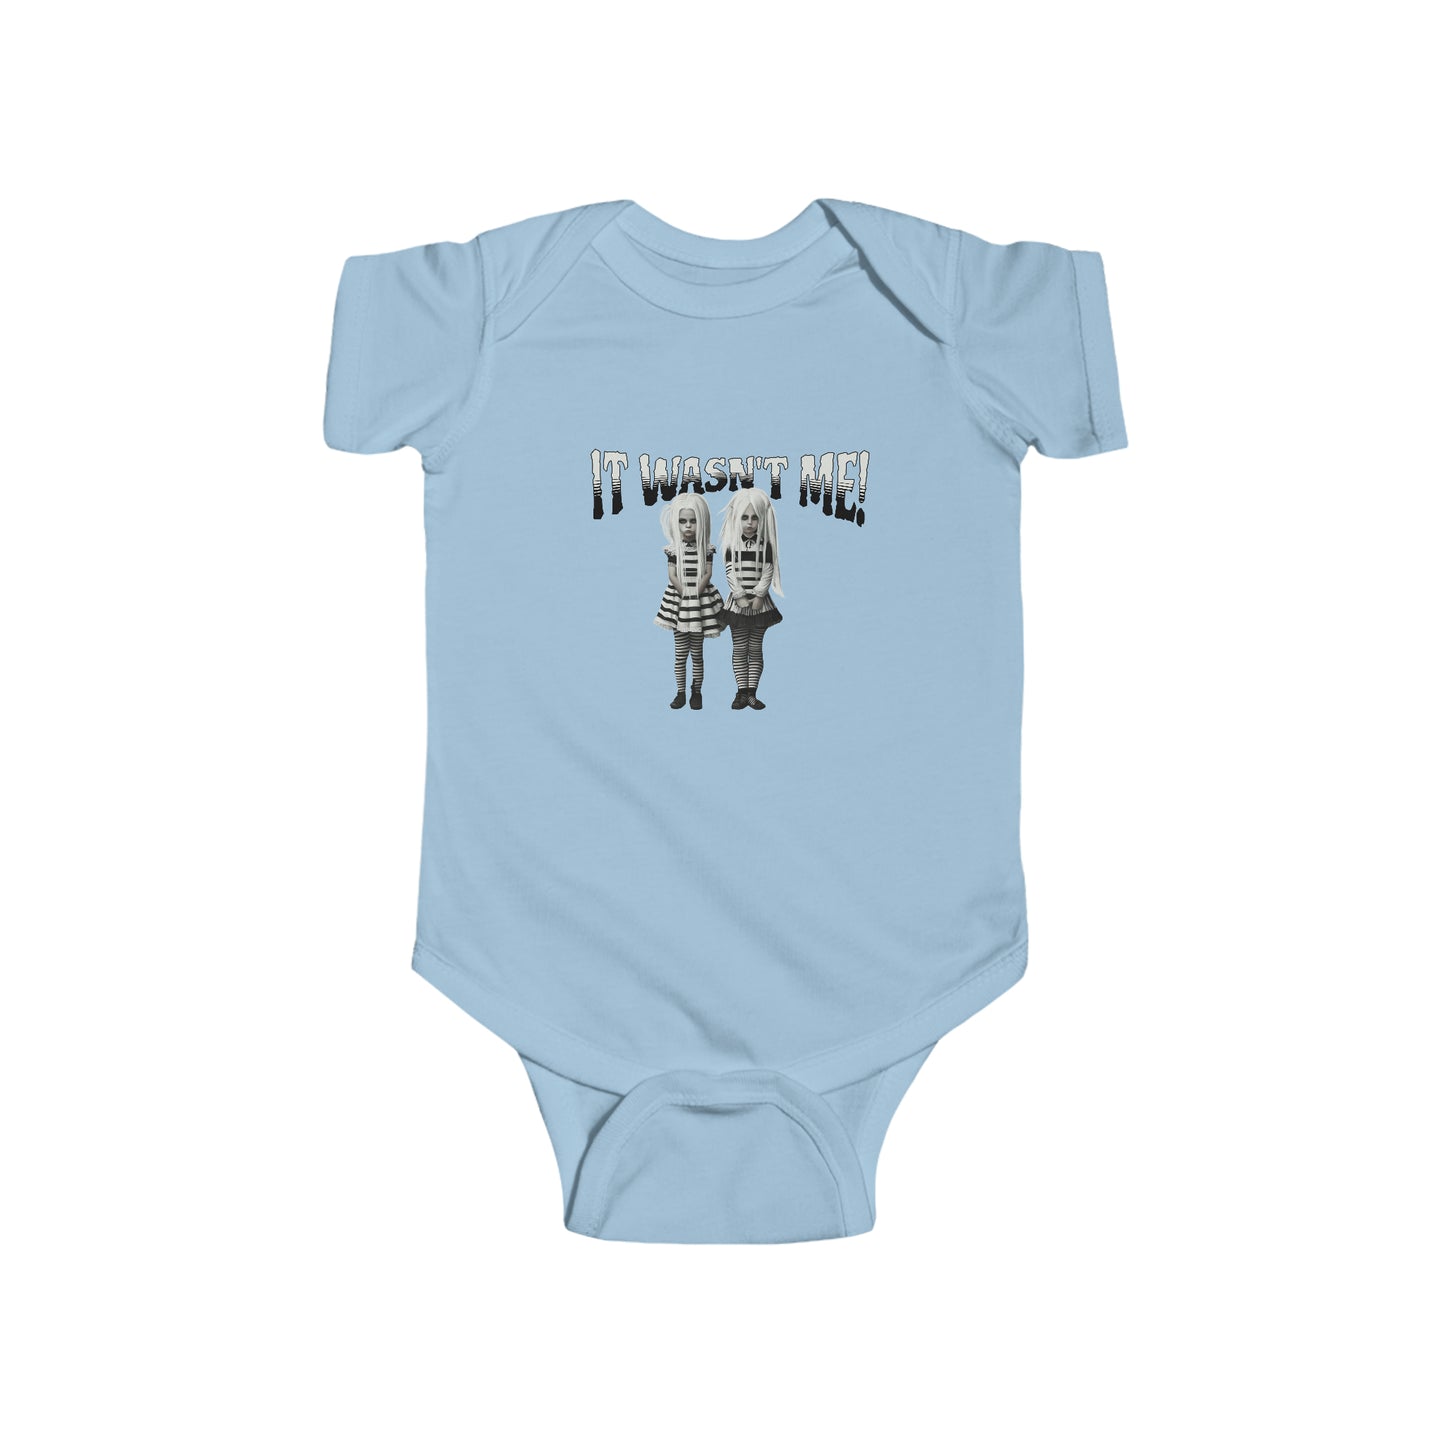 Baby/Infant Alternative "It Wasn't Me!" Funny Bodysuit